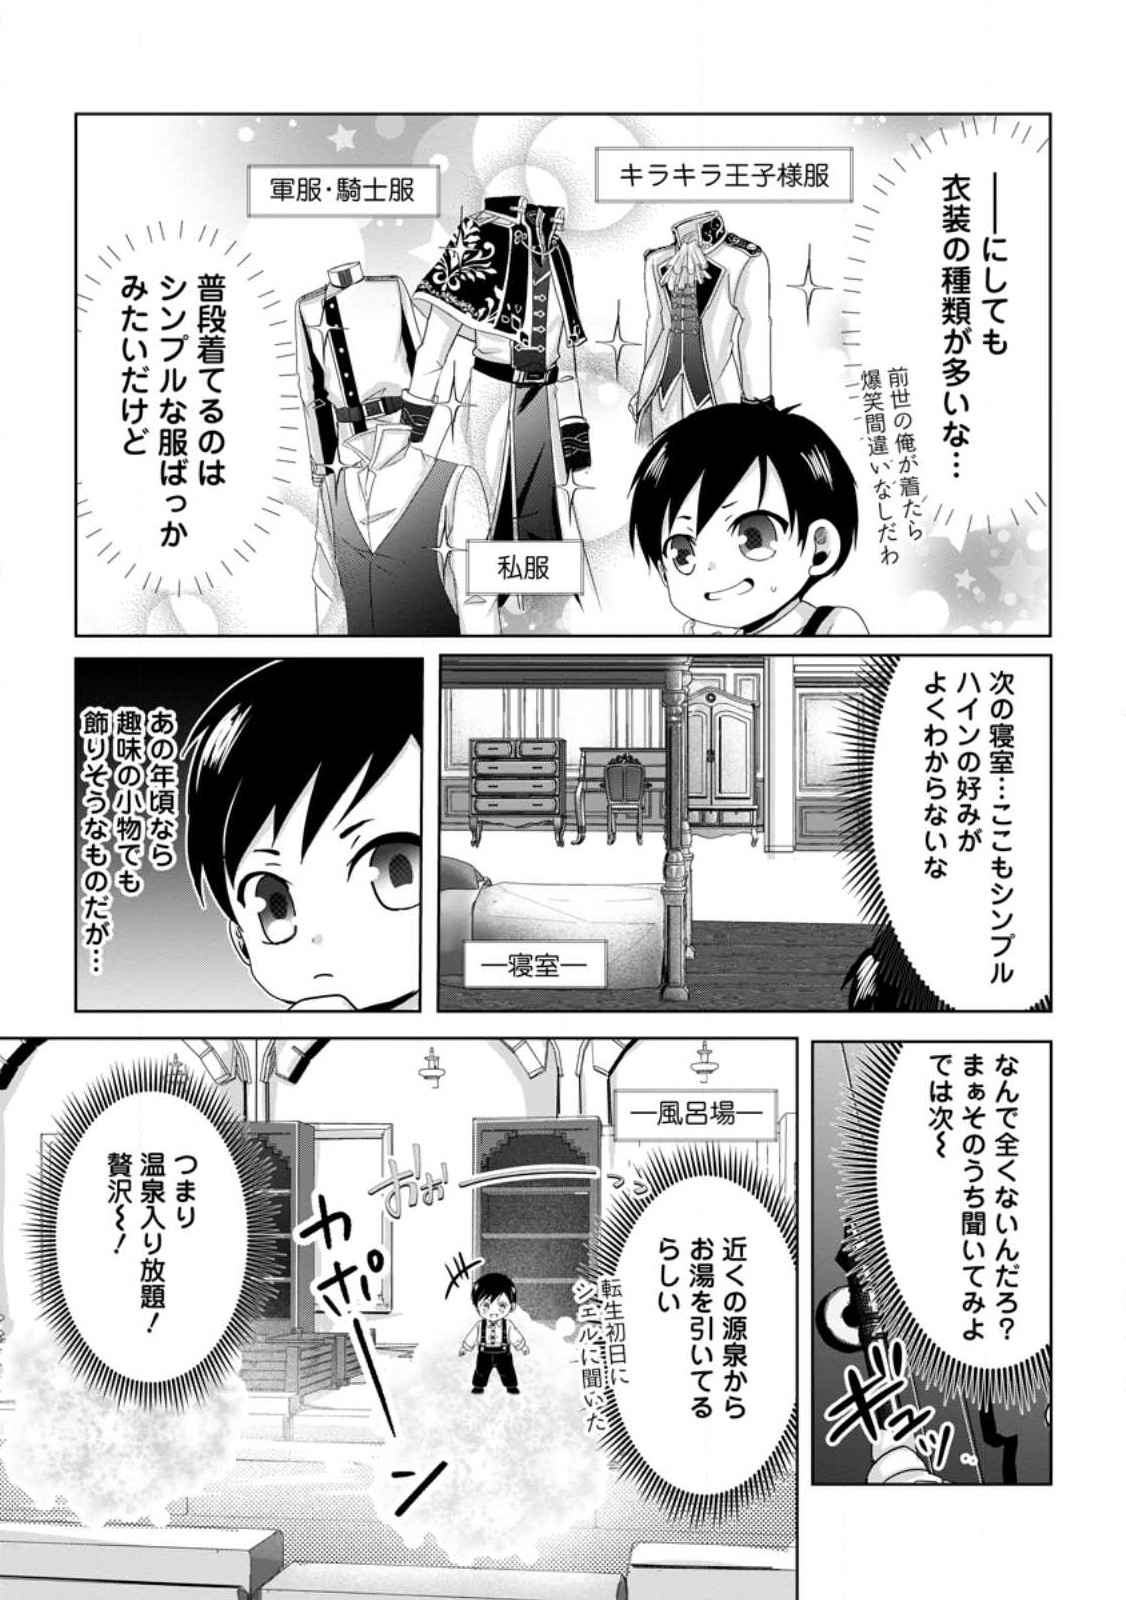 Chittai Ore no Makikomare Isekai Seikatsu - Chapter 6.2 - Page 1